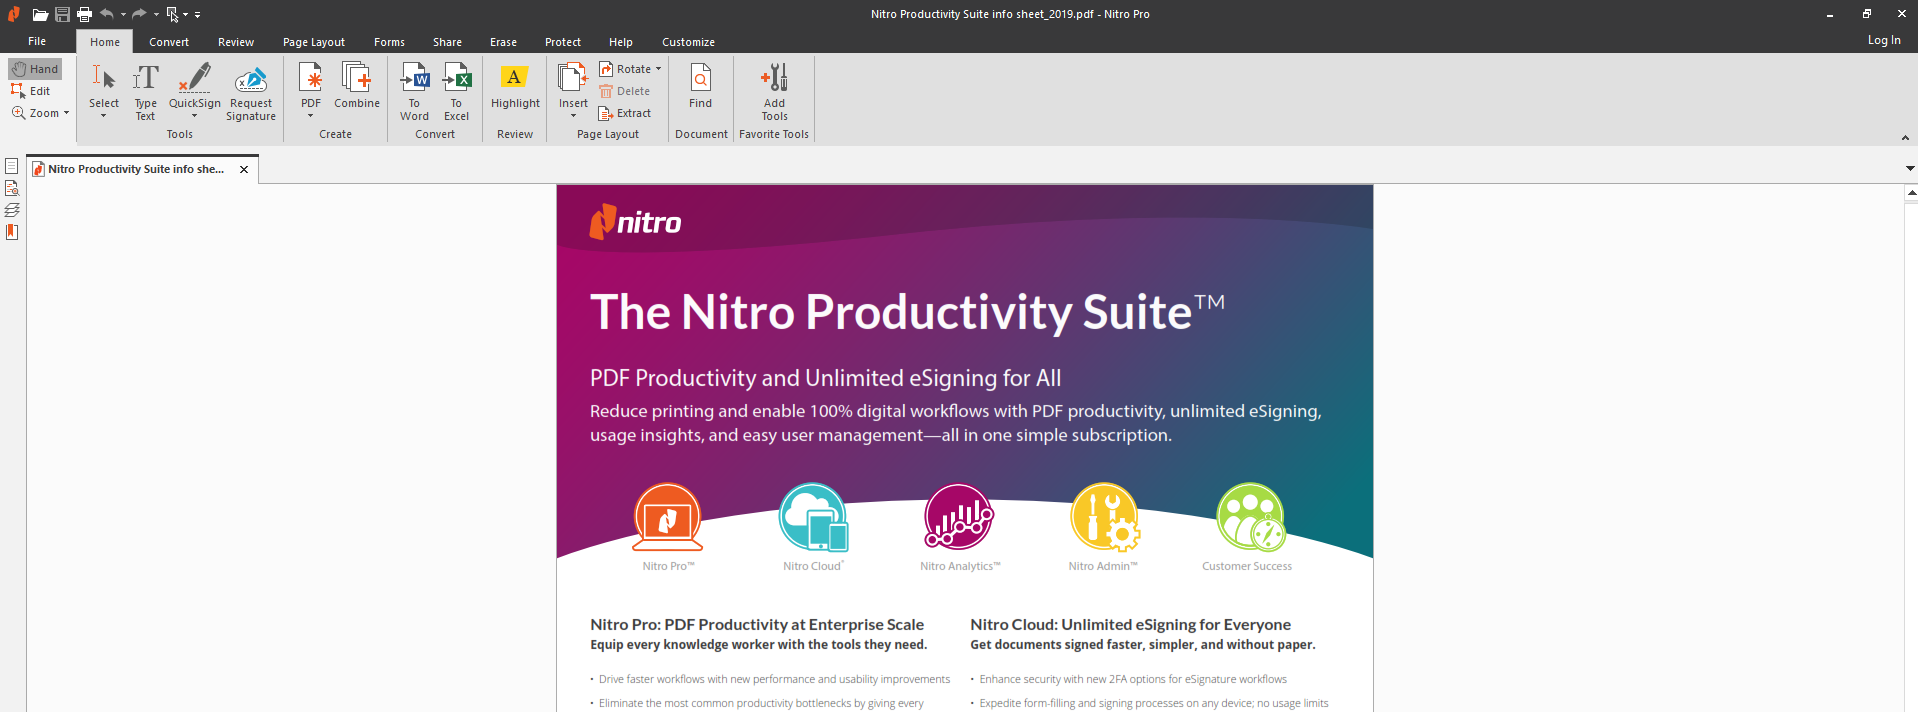 Nitro Software - Nitro Pro | Home tab